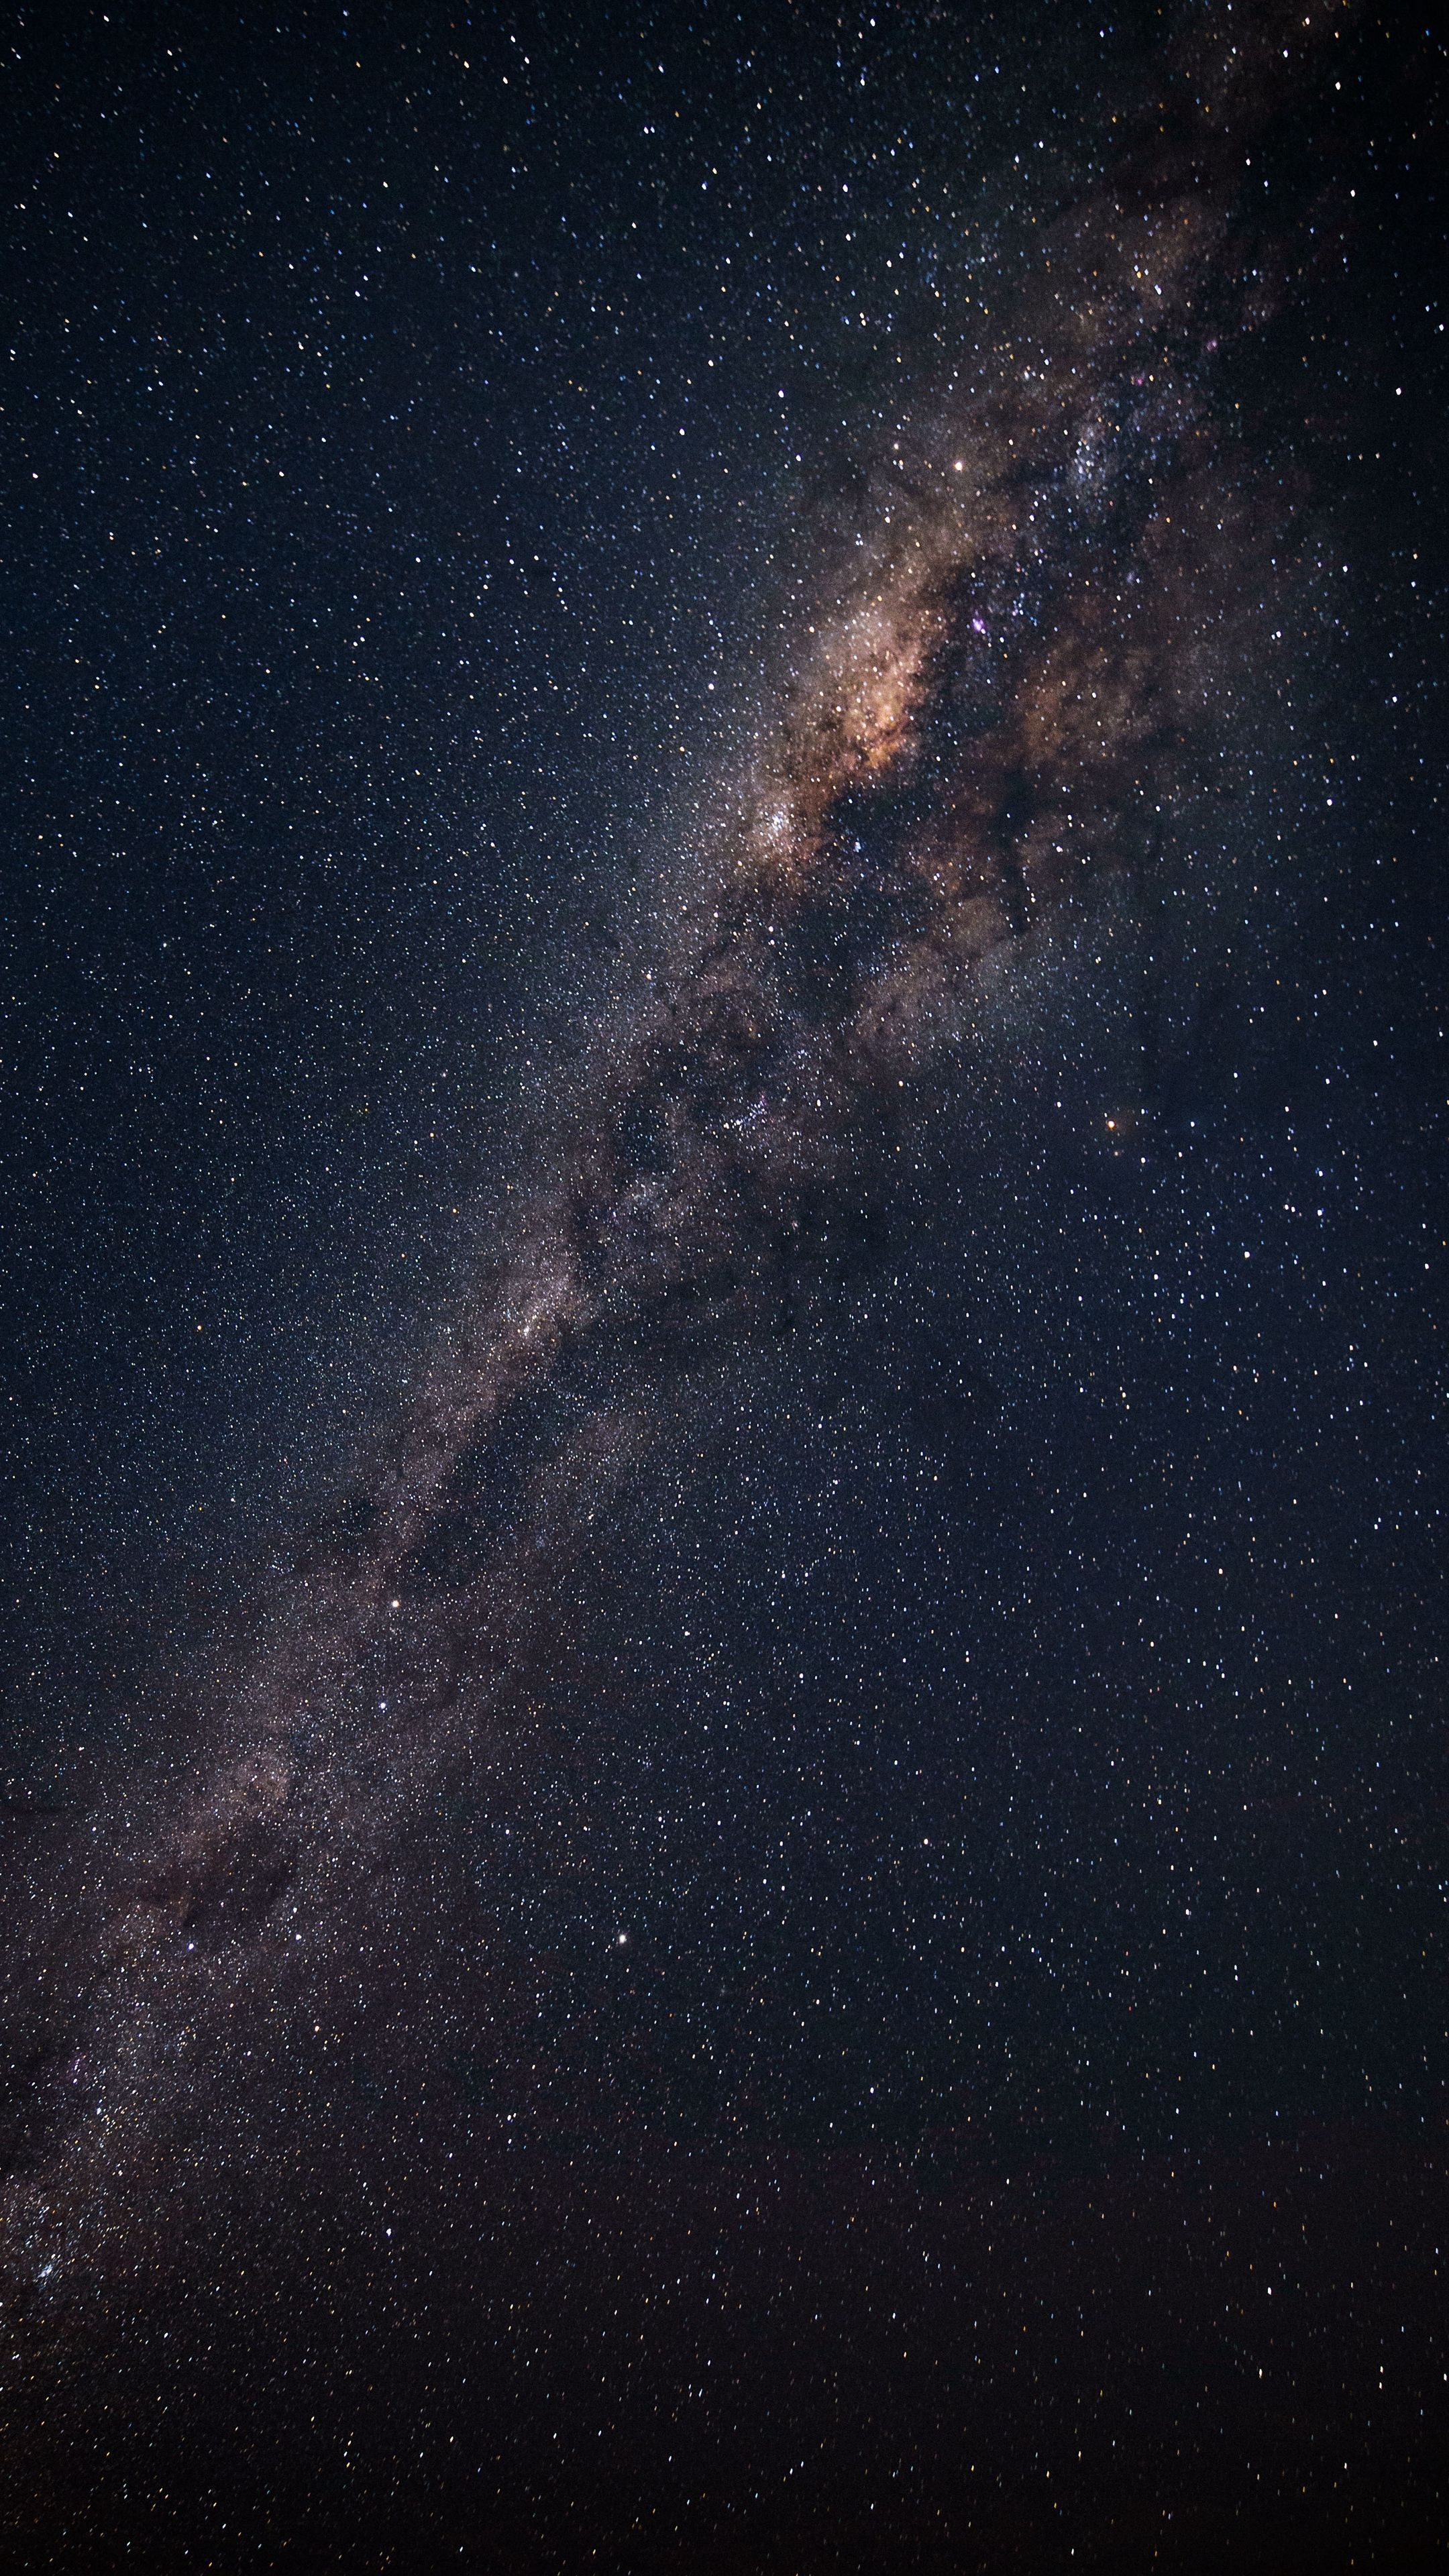 2160x3840 Wallpaper starry sky, milky way, astronomy, galaxy | Galaxy wallpaper, Night sky wallpaper, Milky way photography